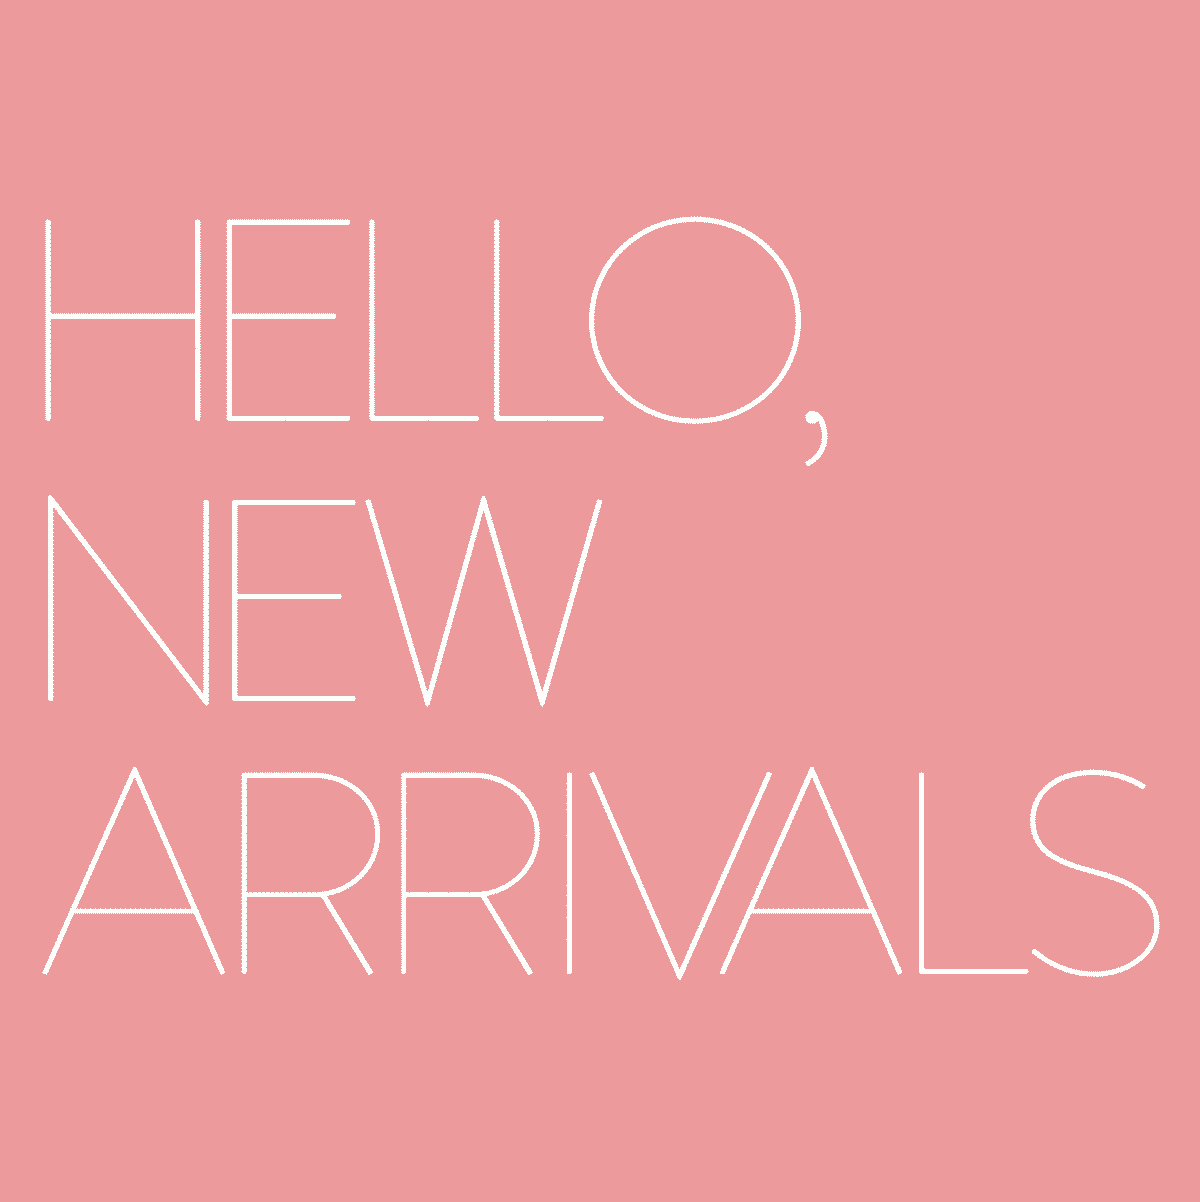 Hello, New Arrivals